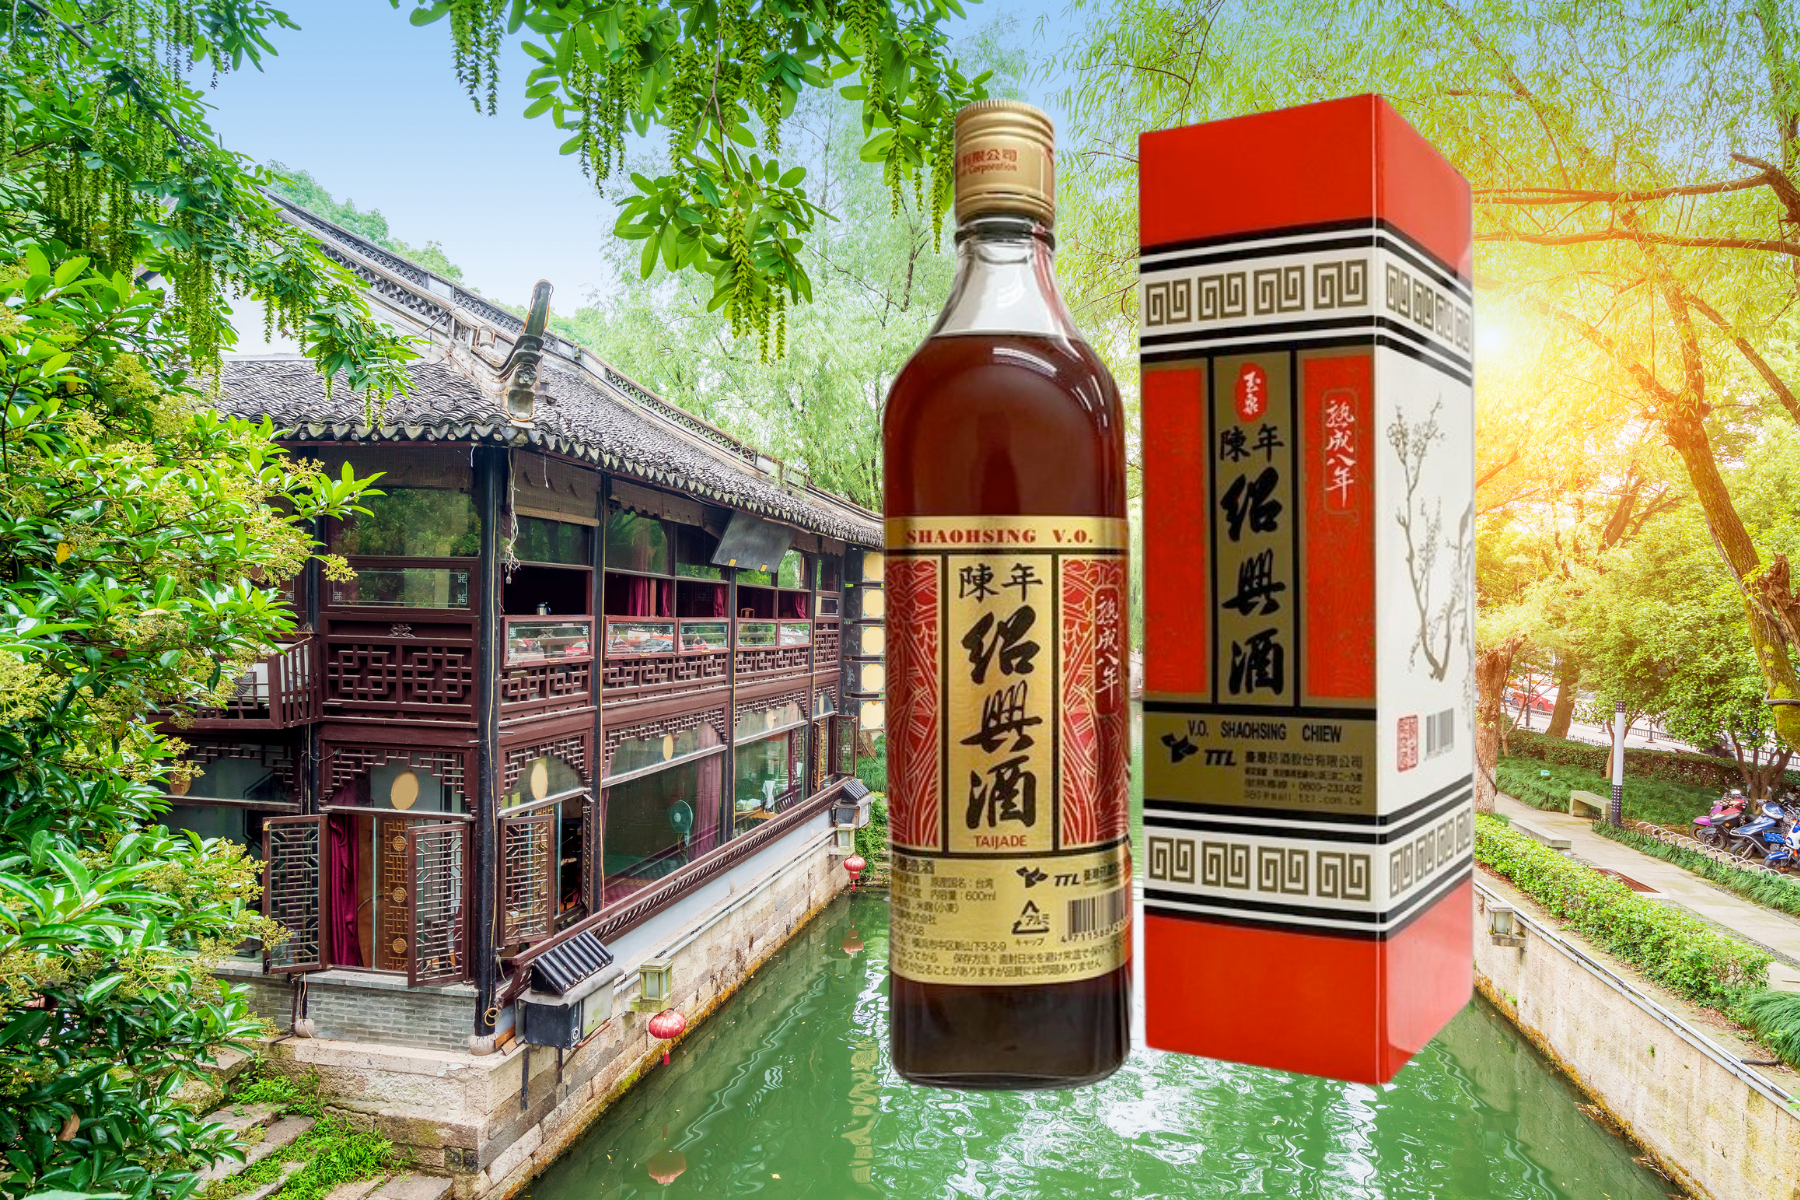 アルコール度数1014%台湾八角瓶紹興酒。本物保証